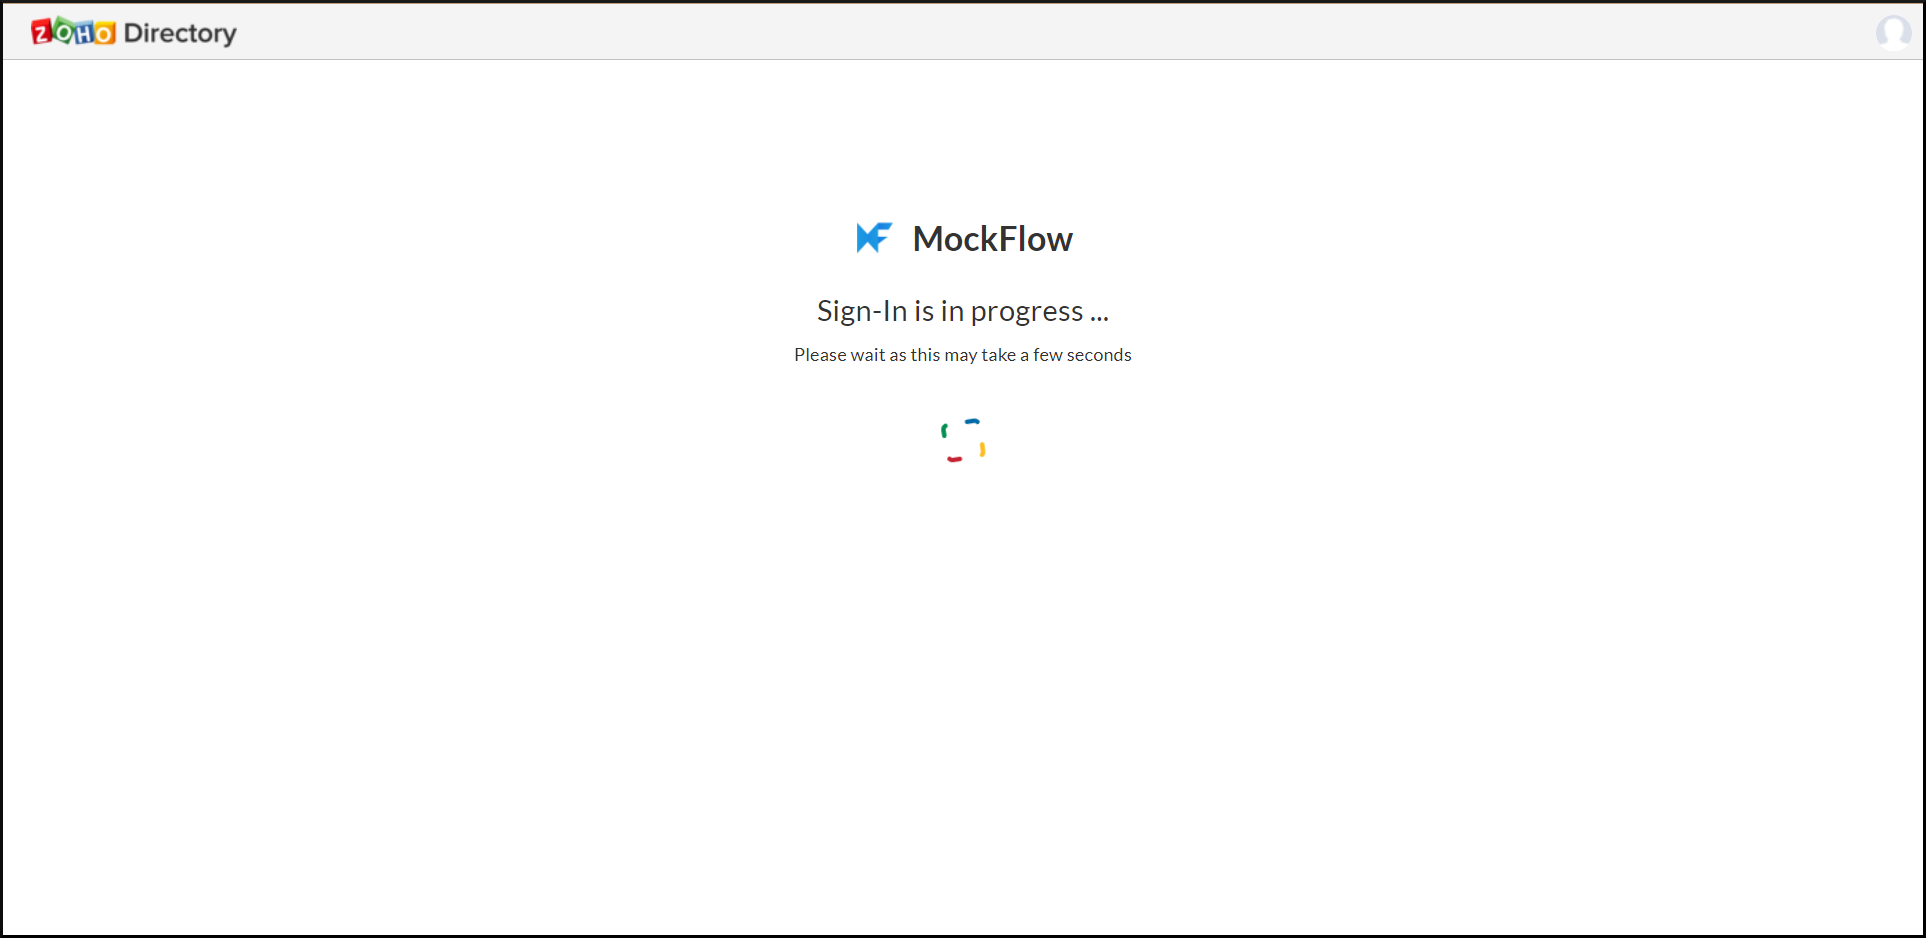 Testing MockFlow SSO configuration